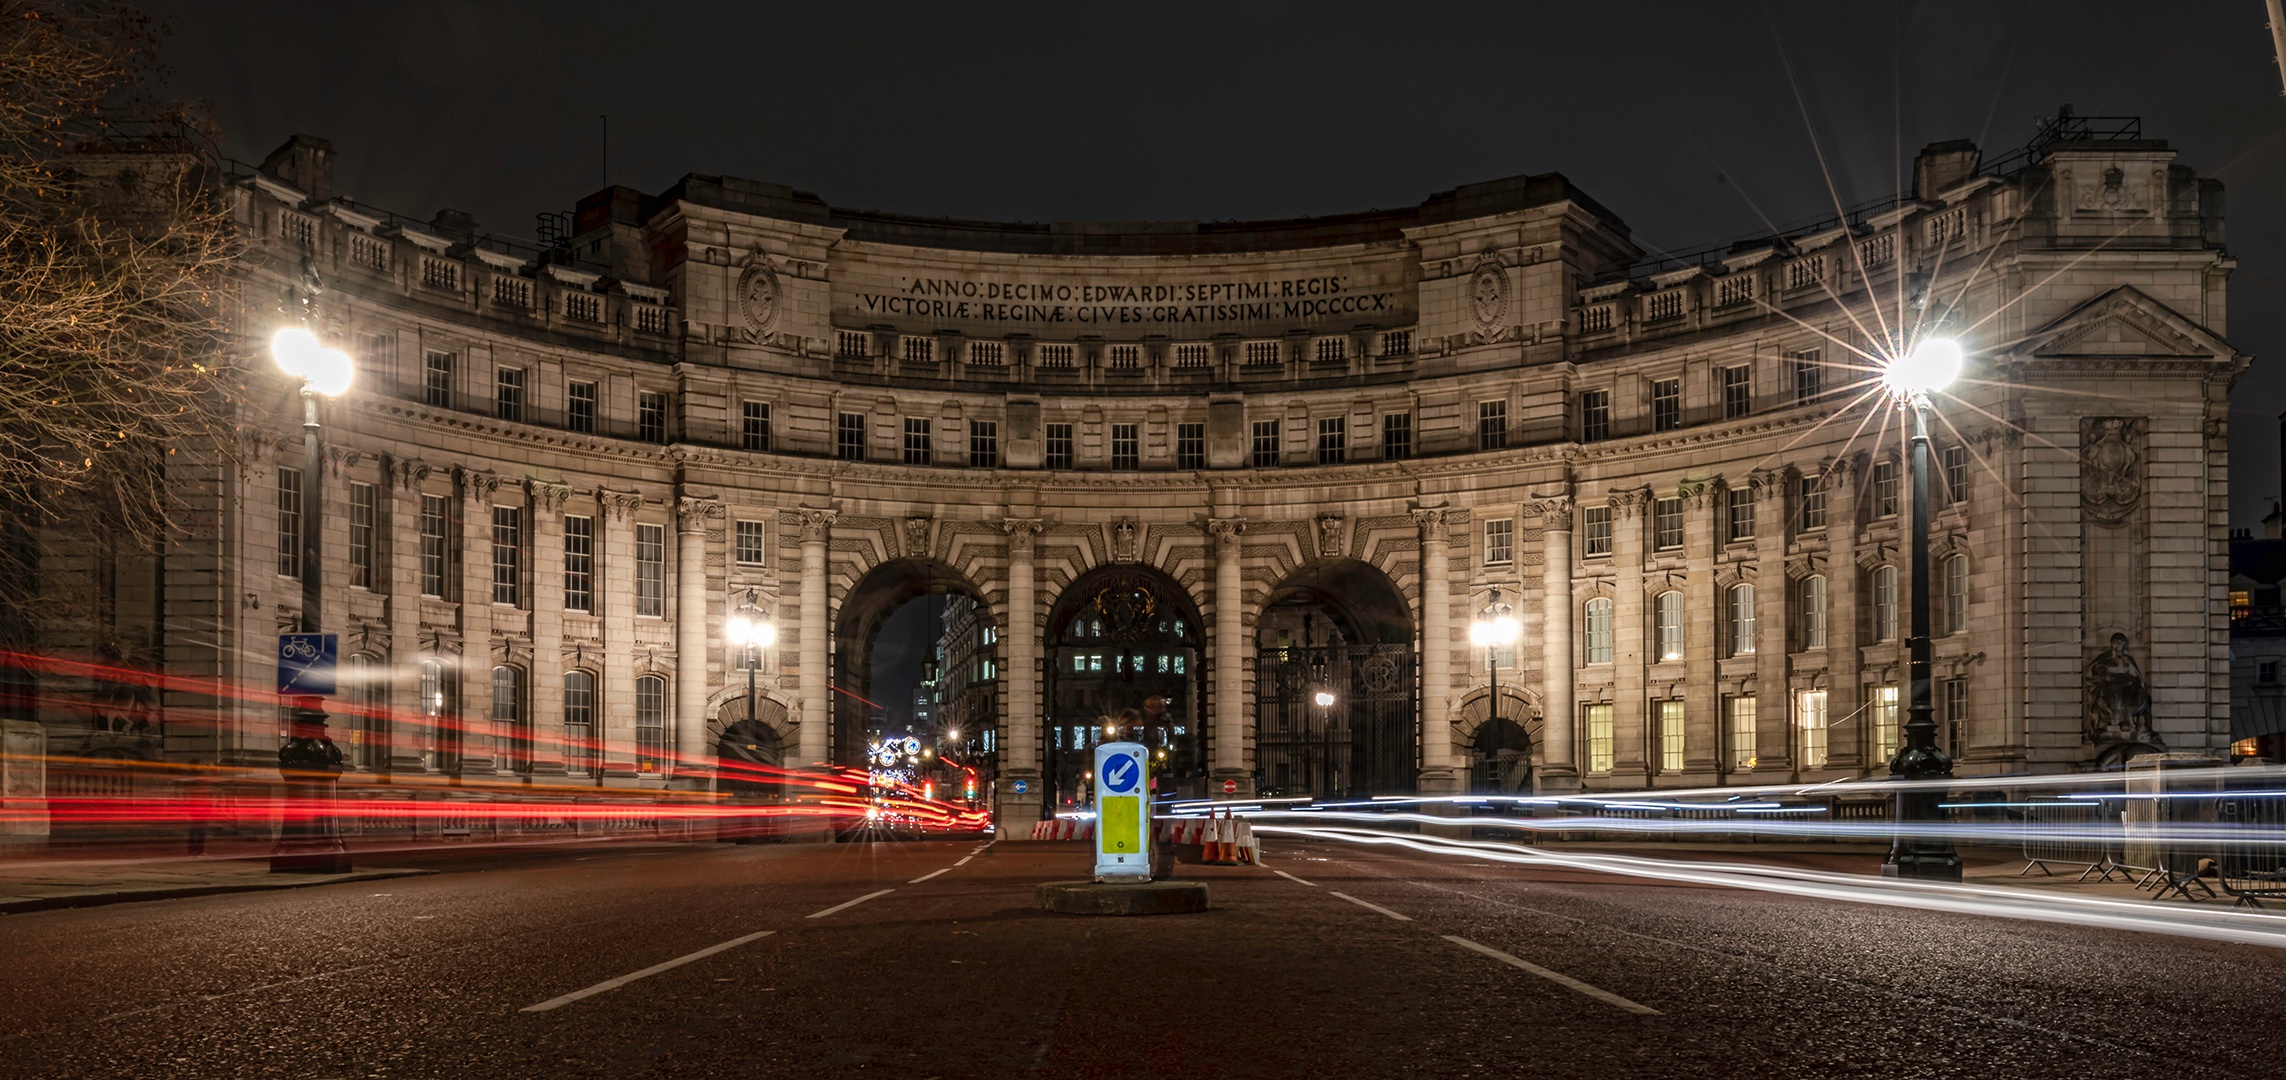 admiralty arch, London, Anglia, ночной город,  дорога, административное здание